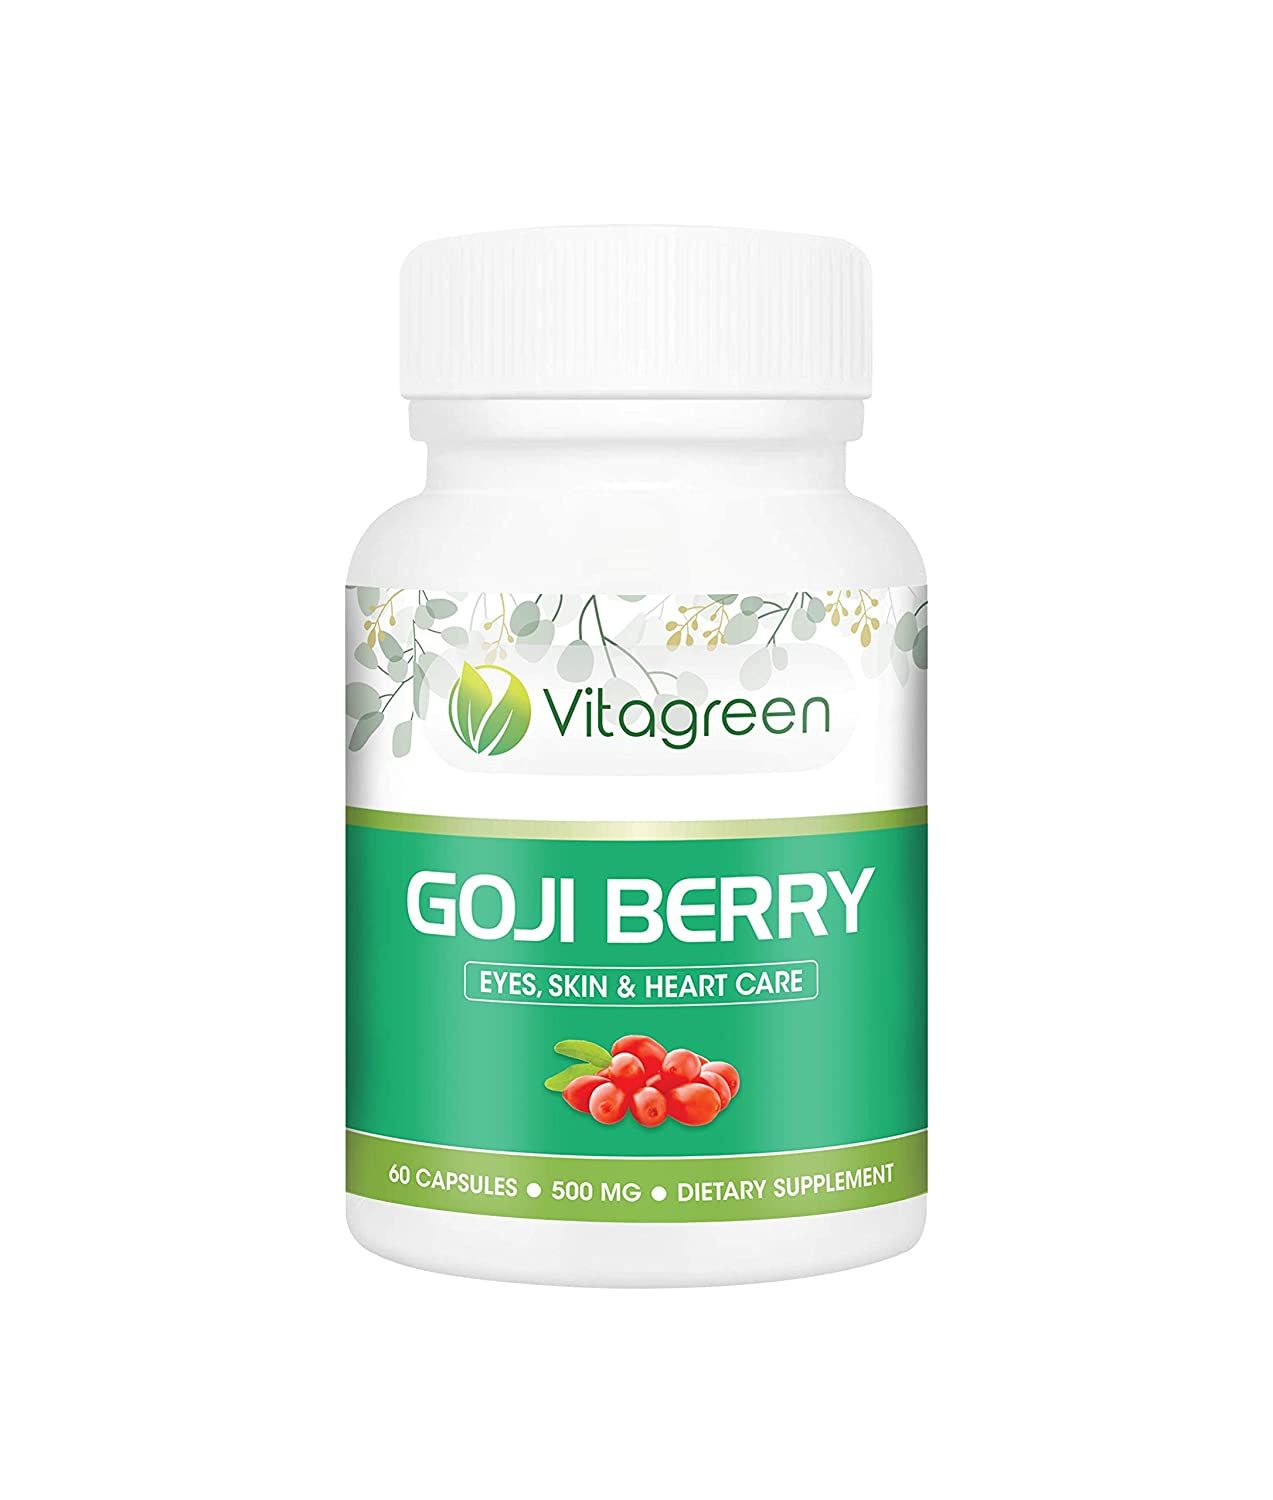 VitaGreen Goji Berry Capsules Image